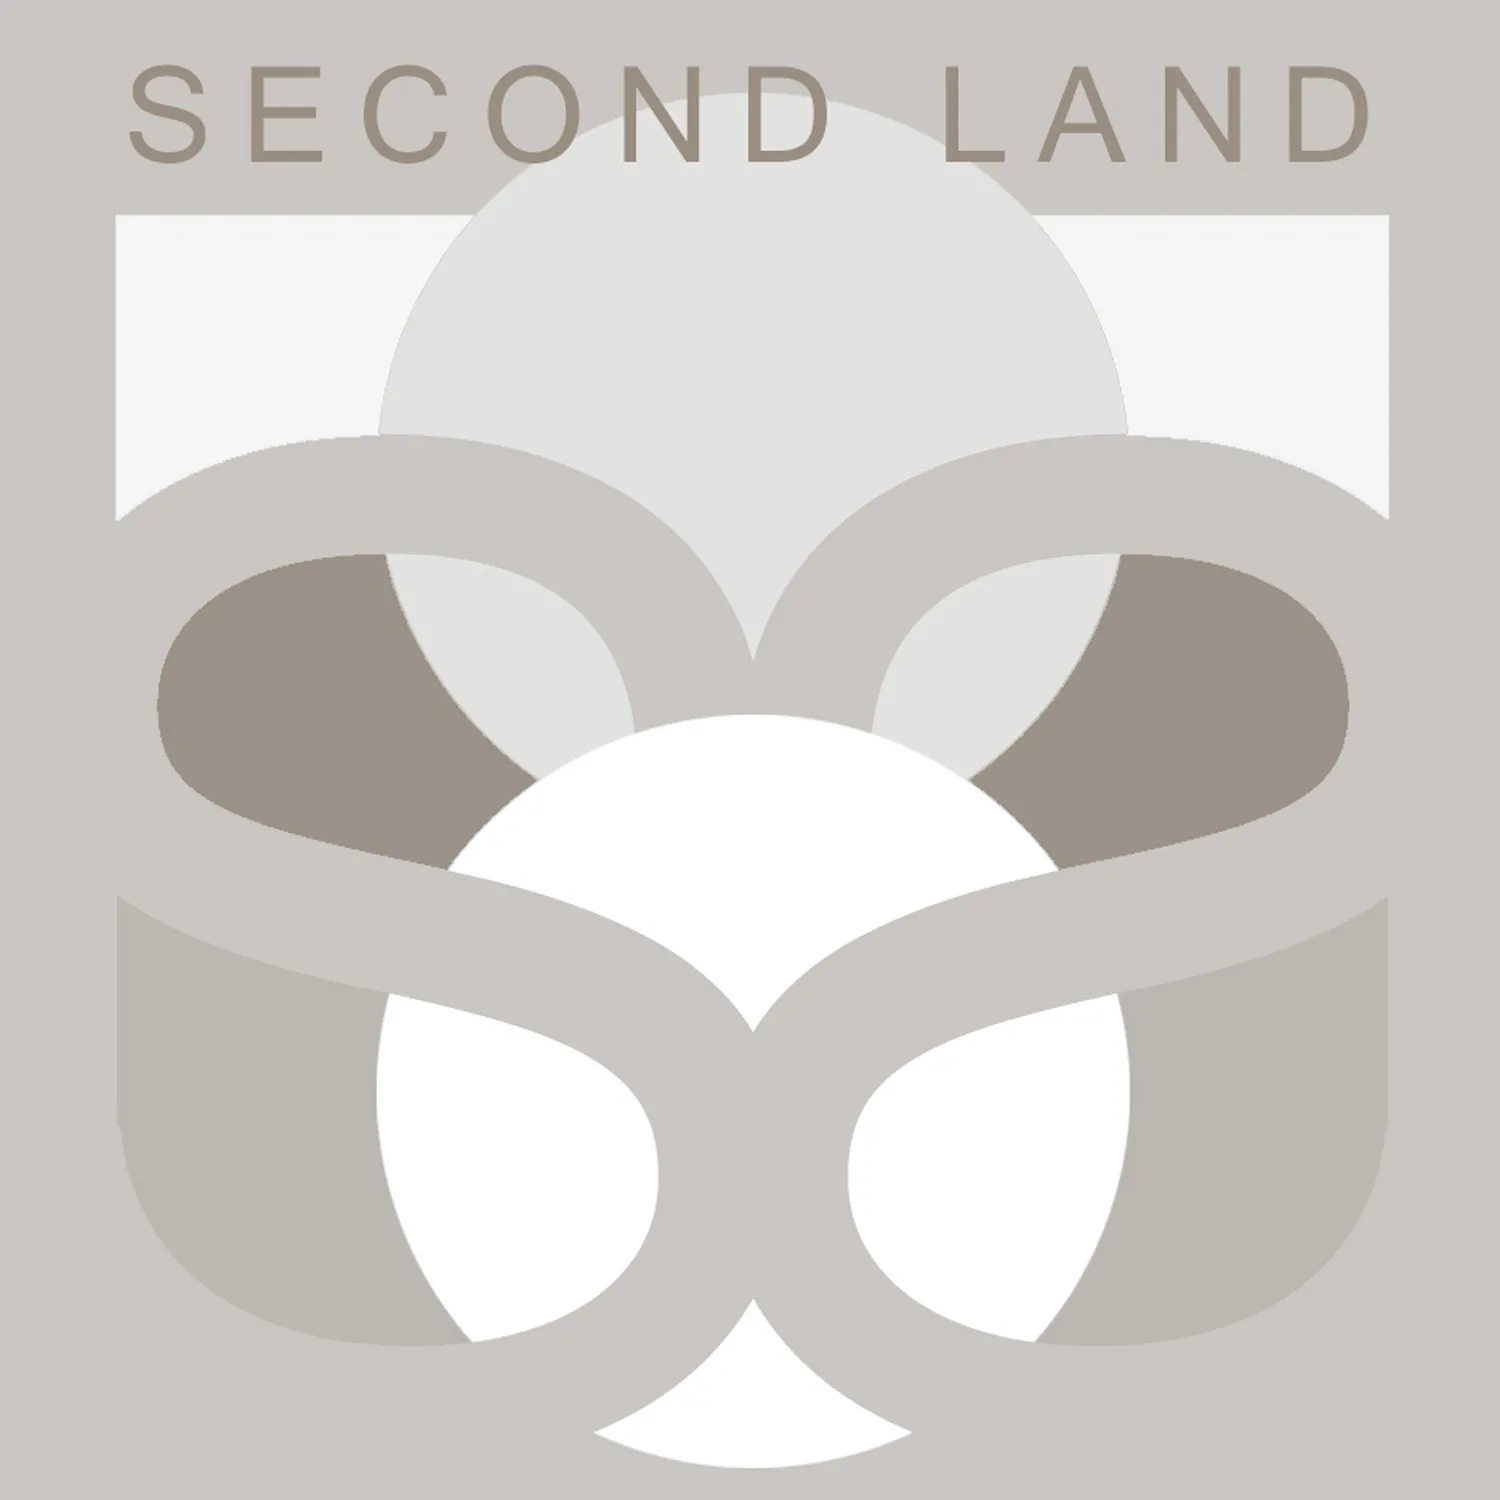 Second Land logo